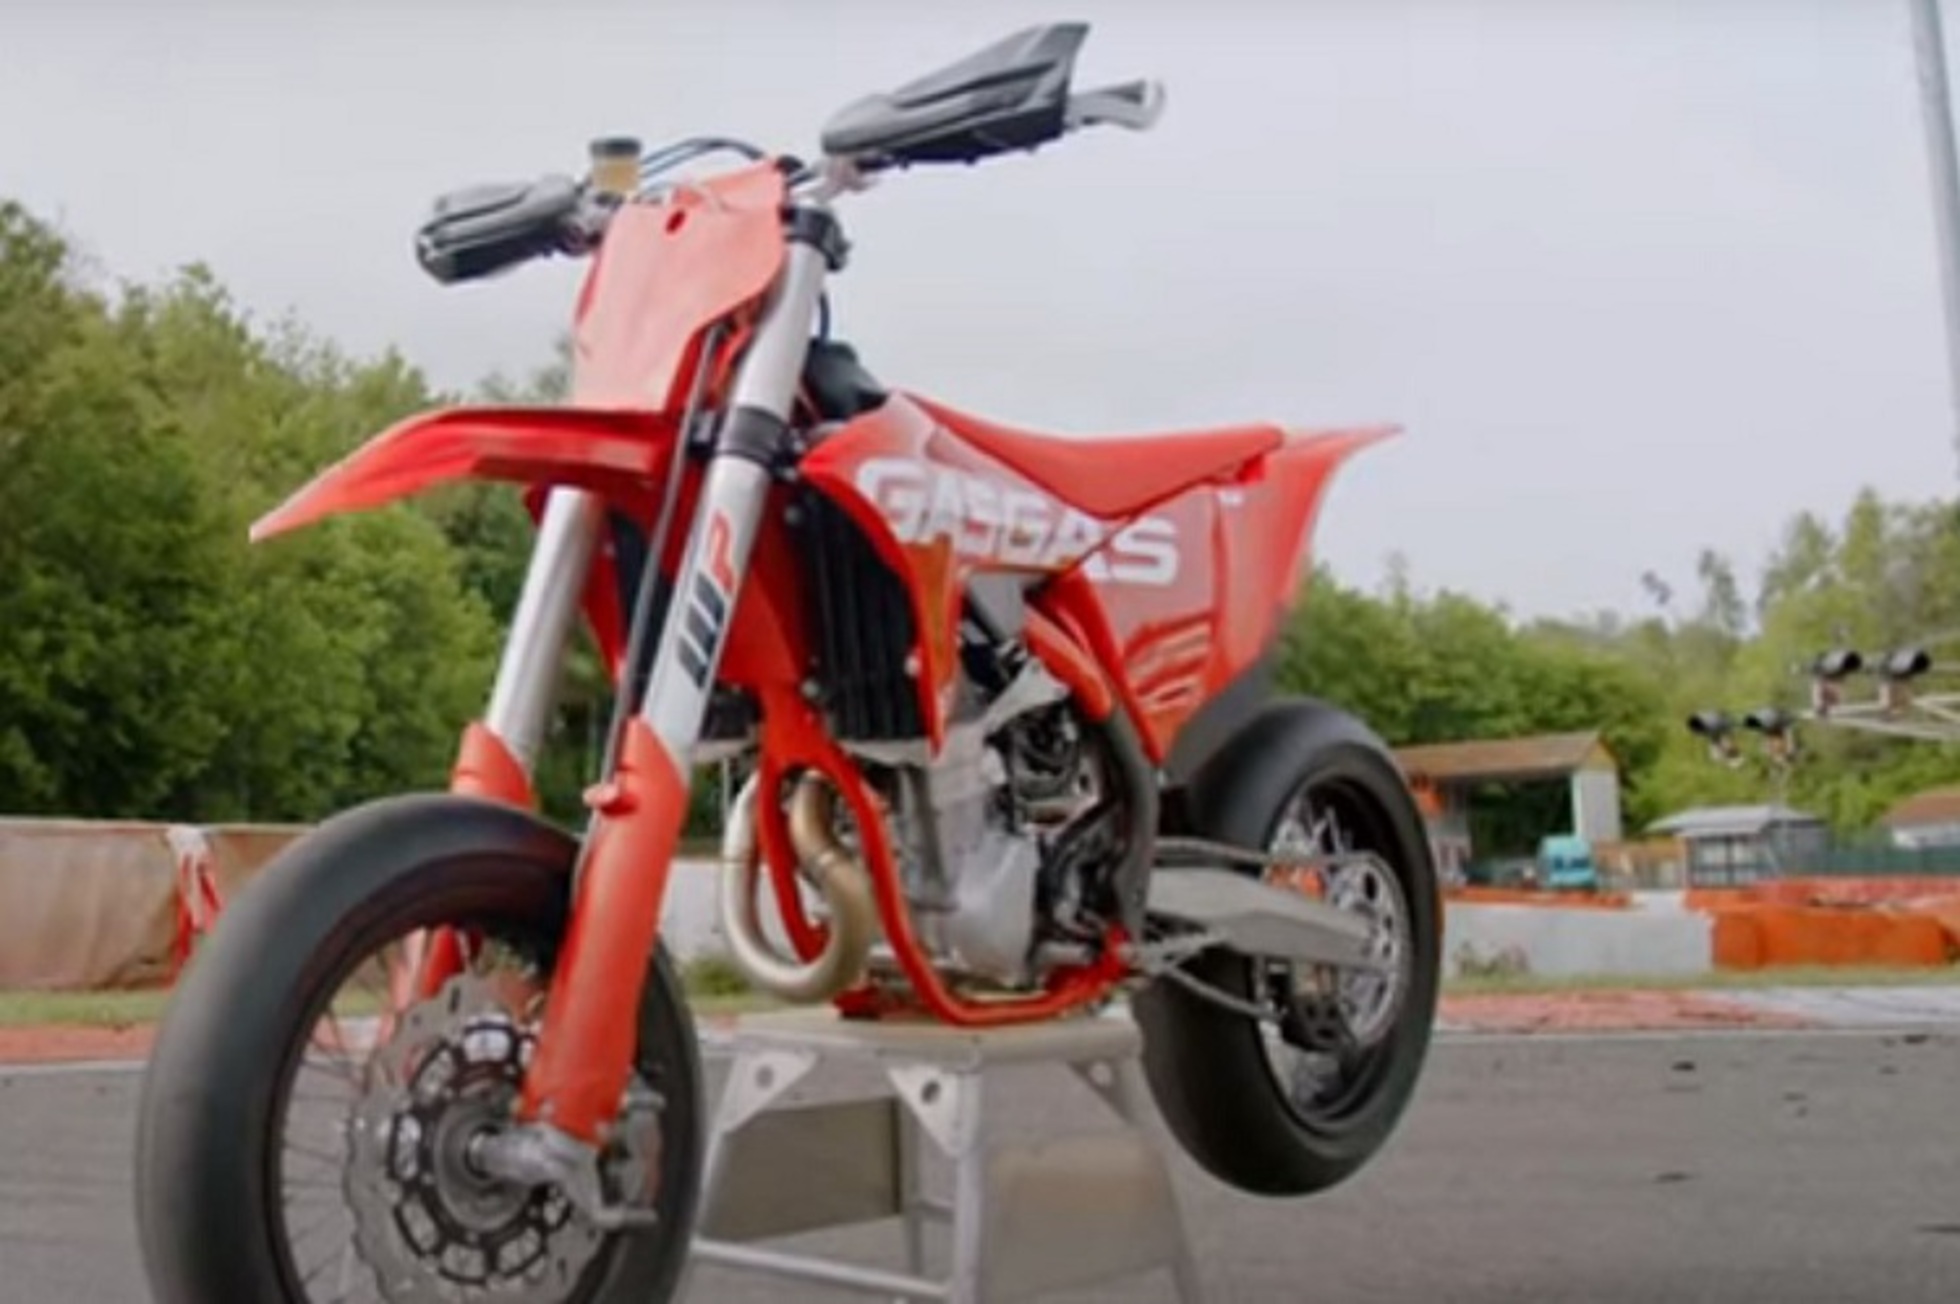 980mm 1080mm Gerade Kopf Motorrad Gas Gaszug Für KTM Honda Suzuki